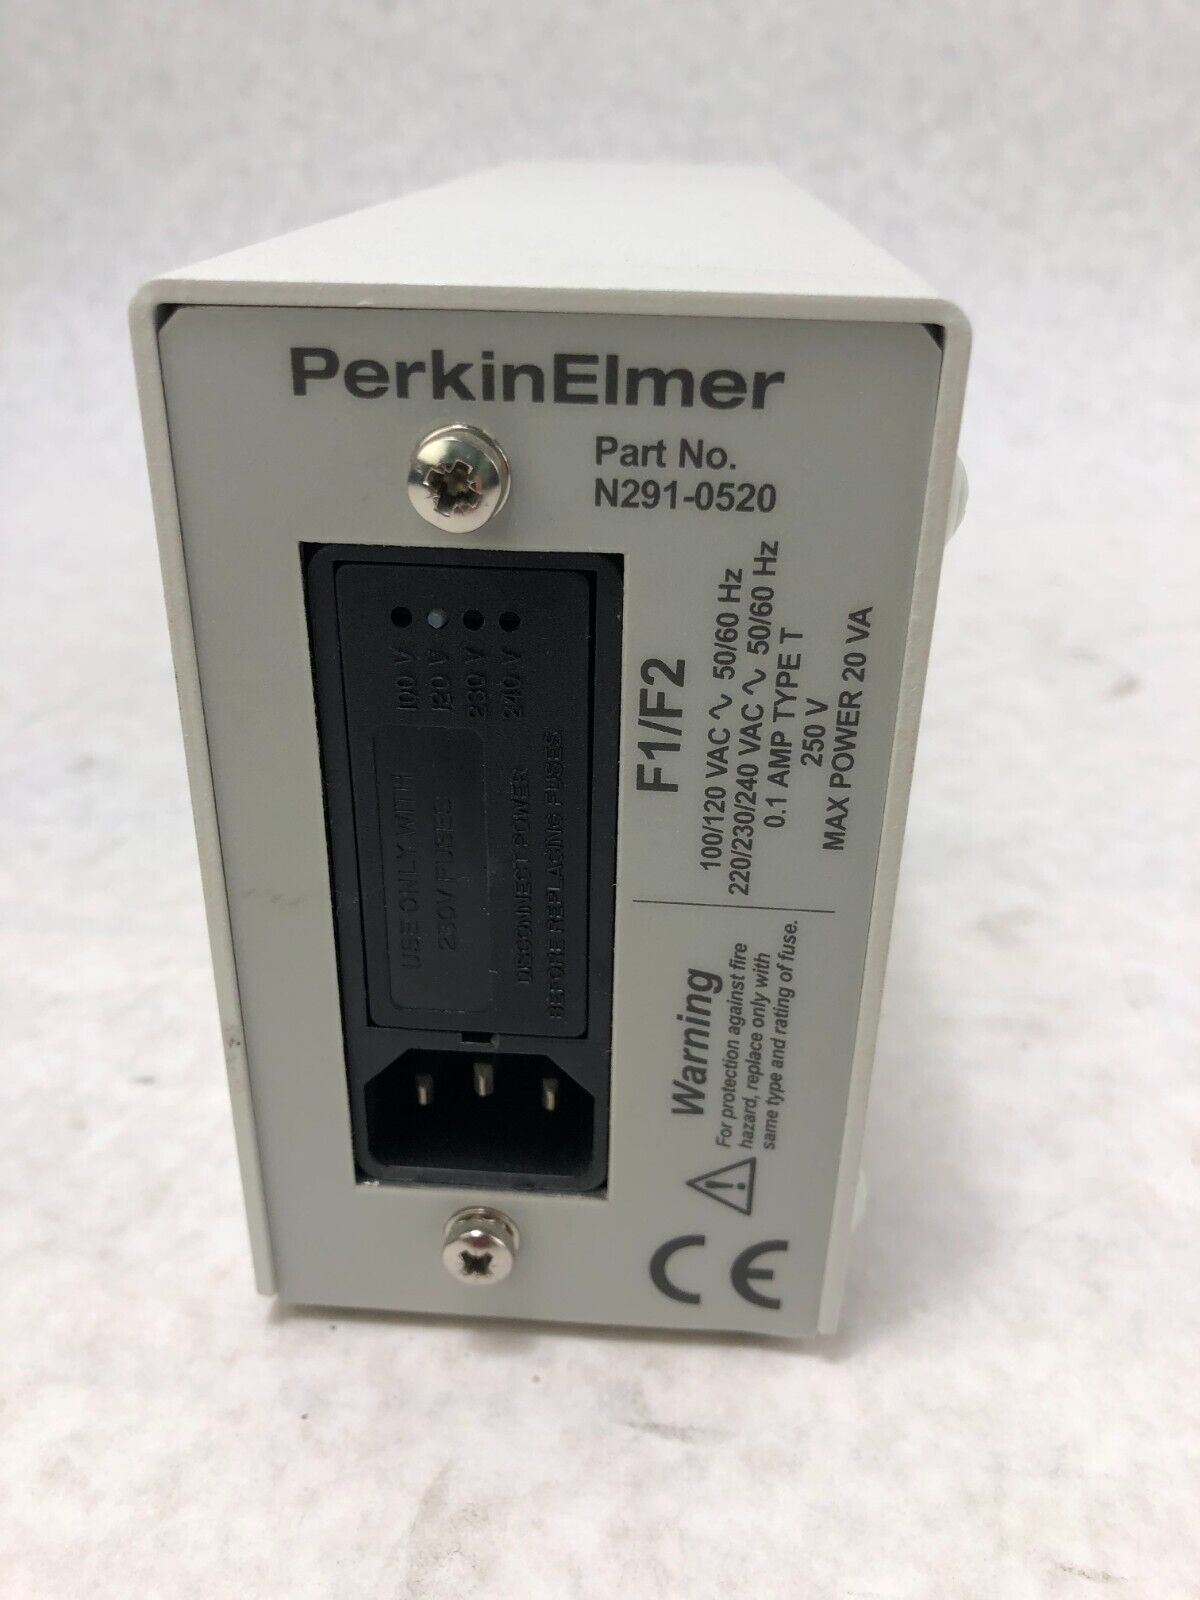 Perkin Elmer N291-0520 Series 200 Mixer